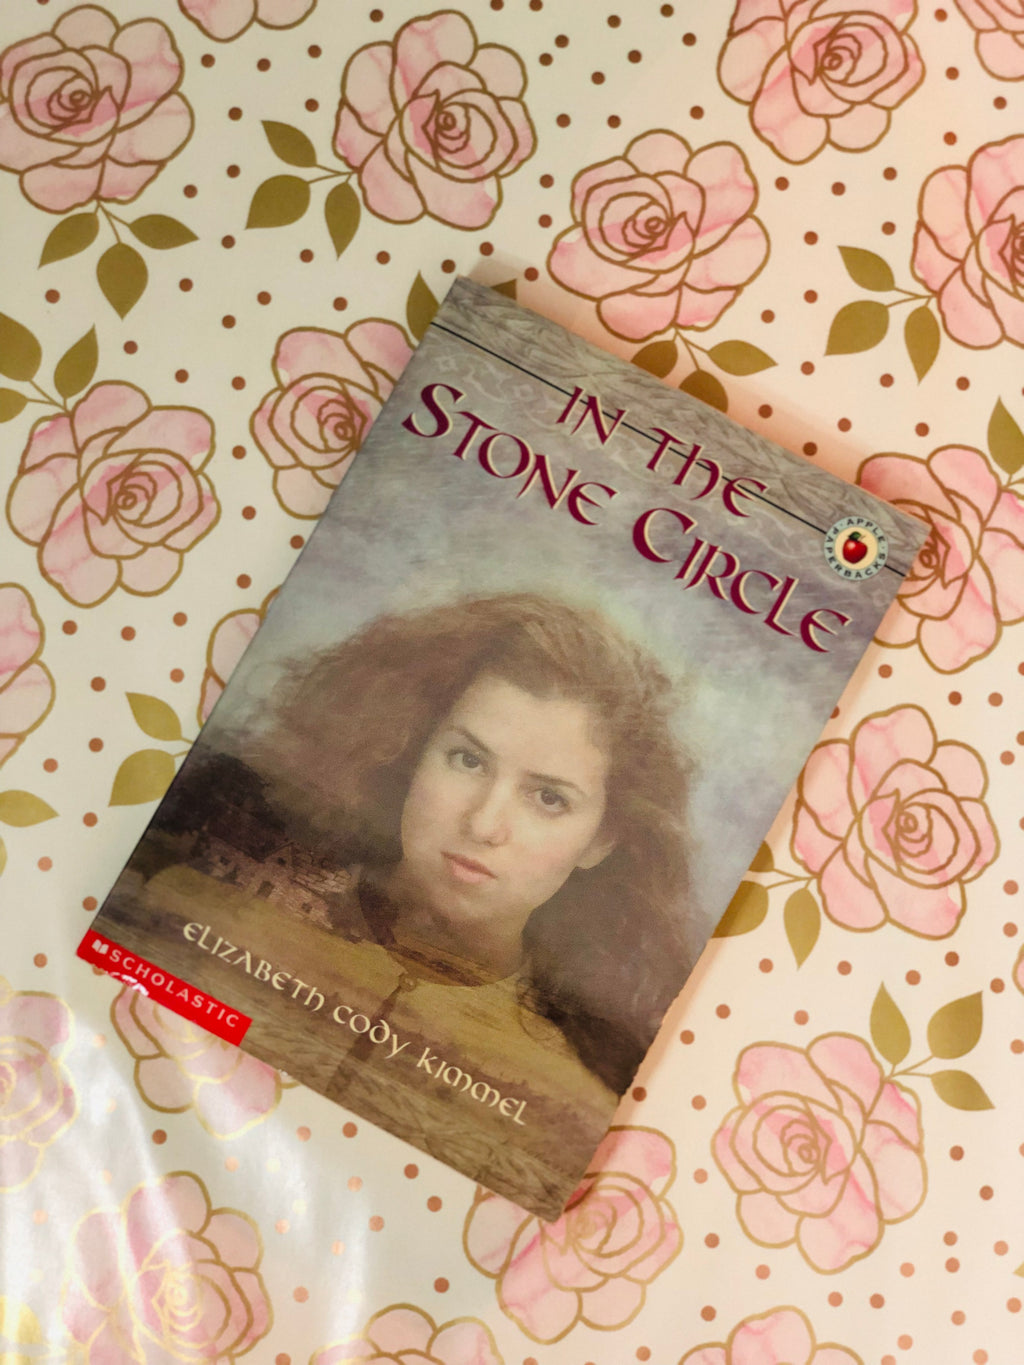 In The Stone Circle- By Elizabeth Cody Kimmel